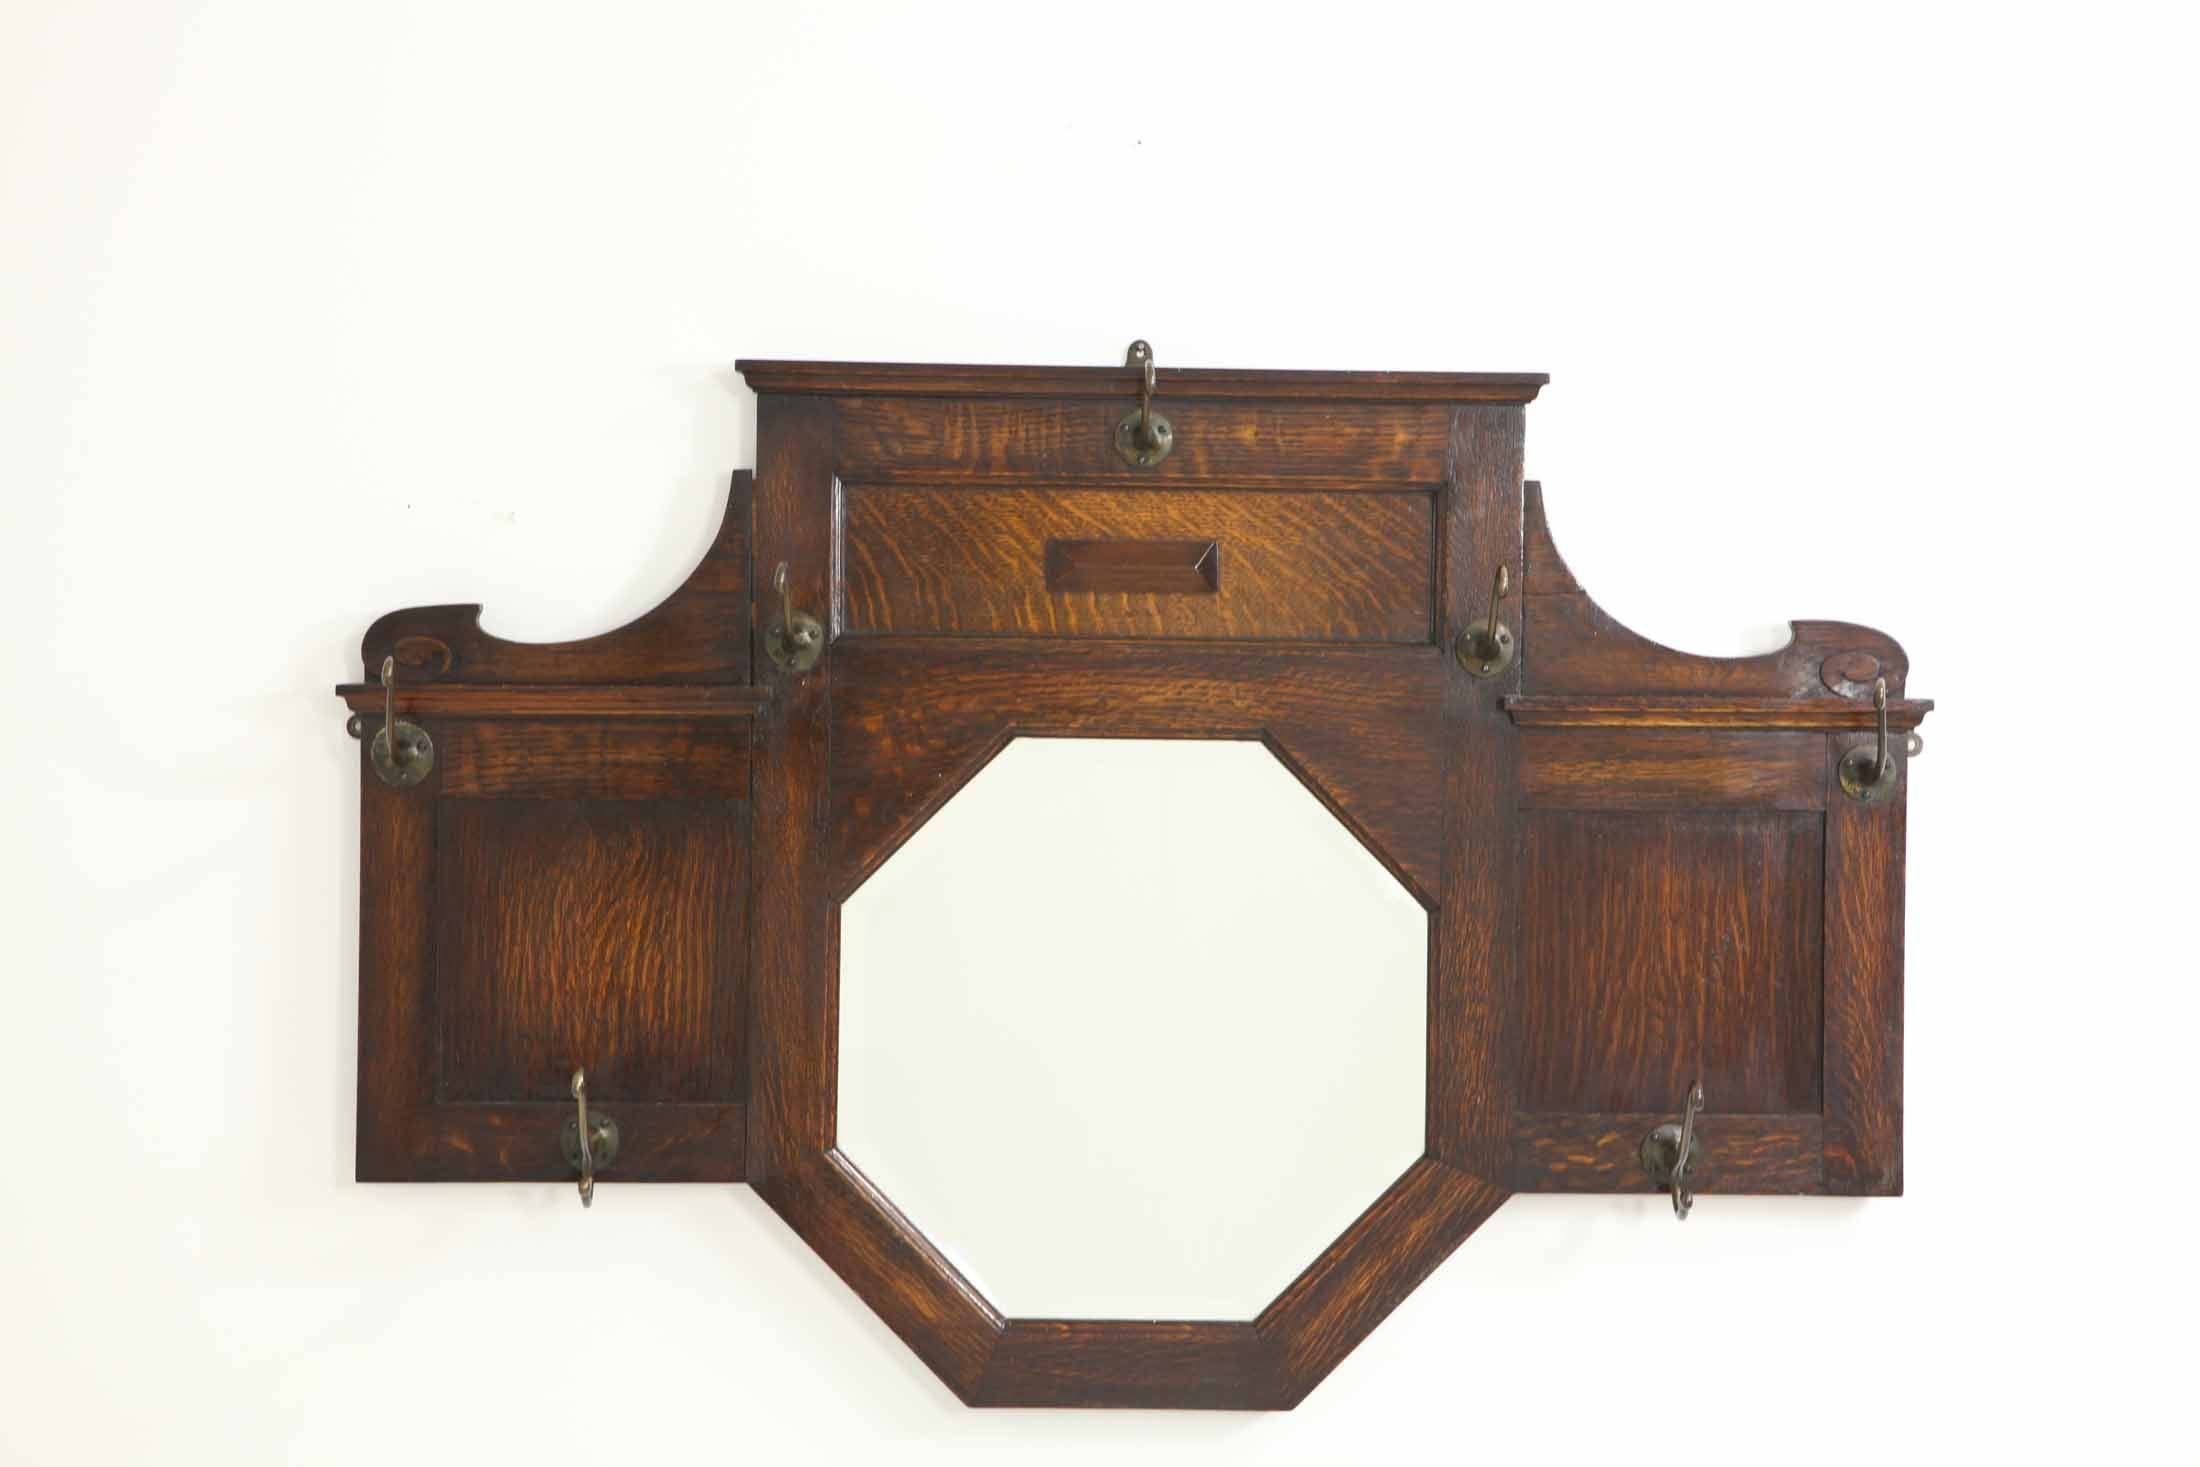 Oak Hall Coat Rack With Bevelled Mirror